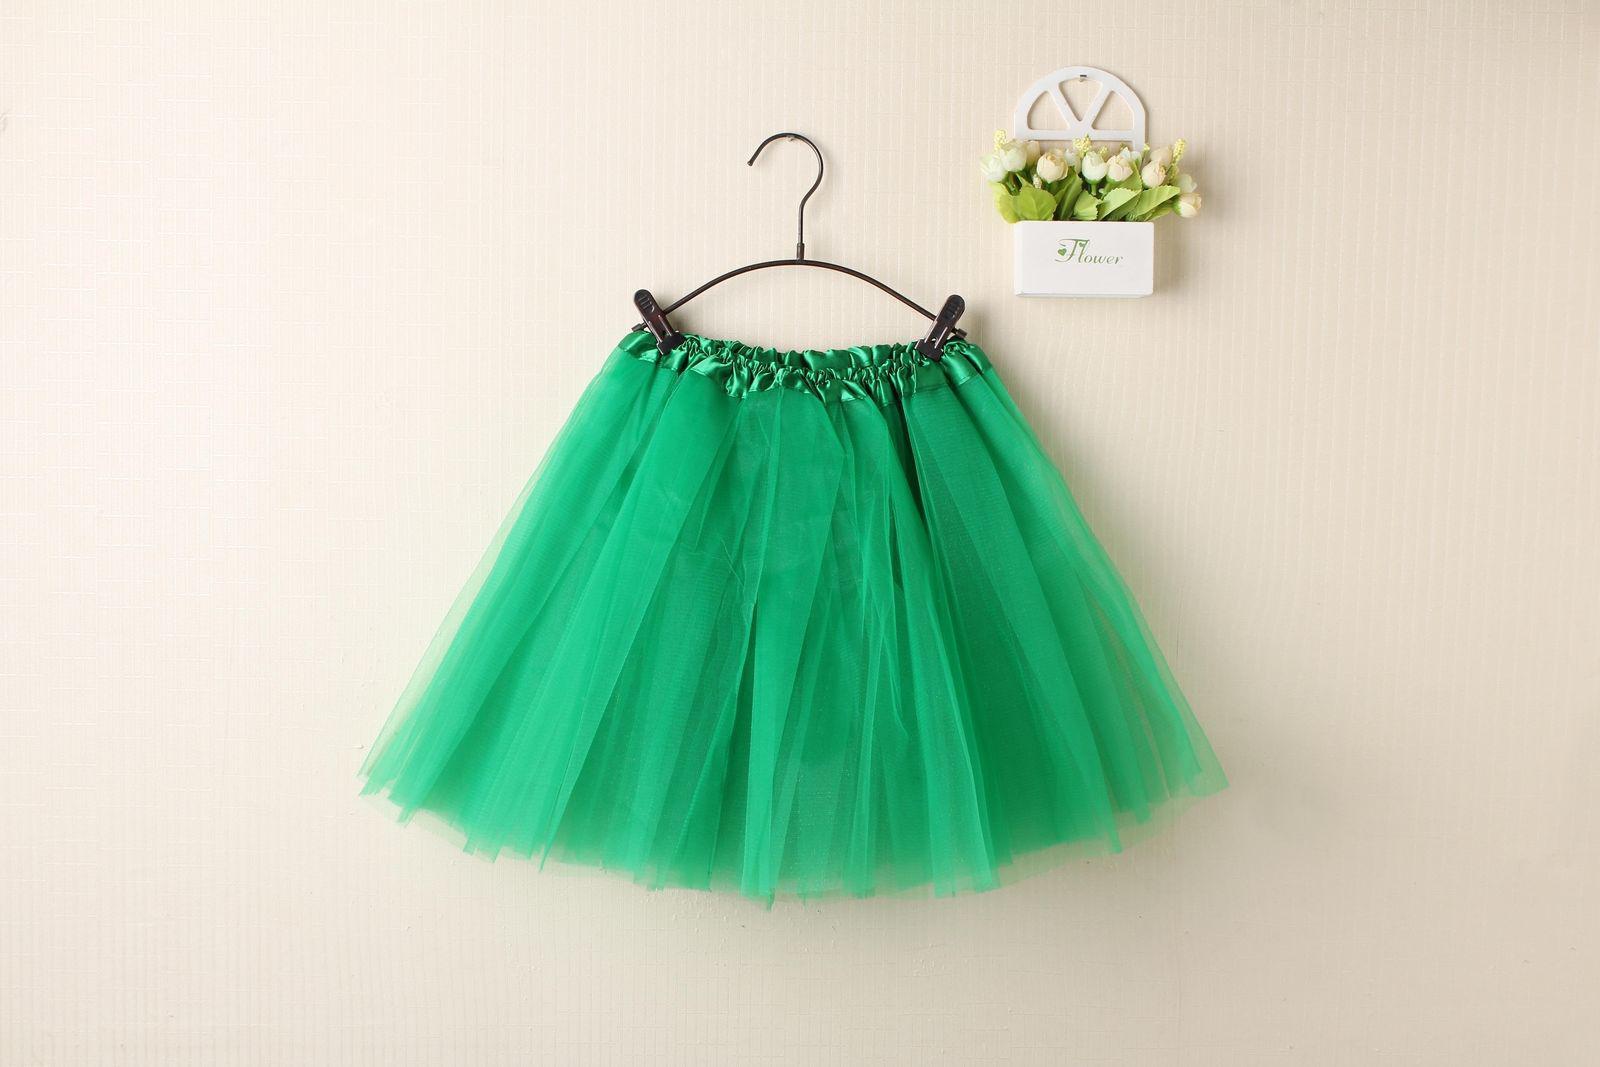 New Adults Tulle Tutu Skirt Dressup Party Costume Ballet Womens Girls Dance Wear - Green (Size: Kids)